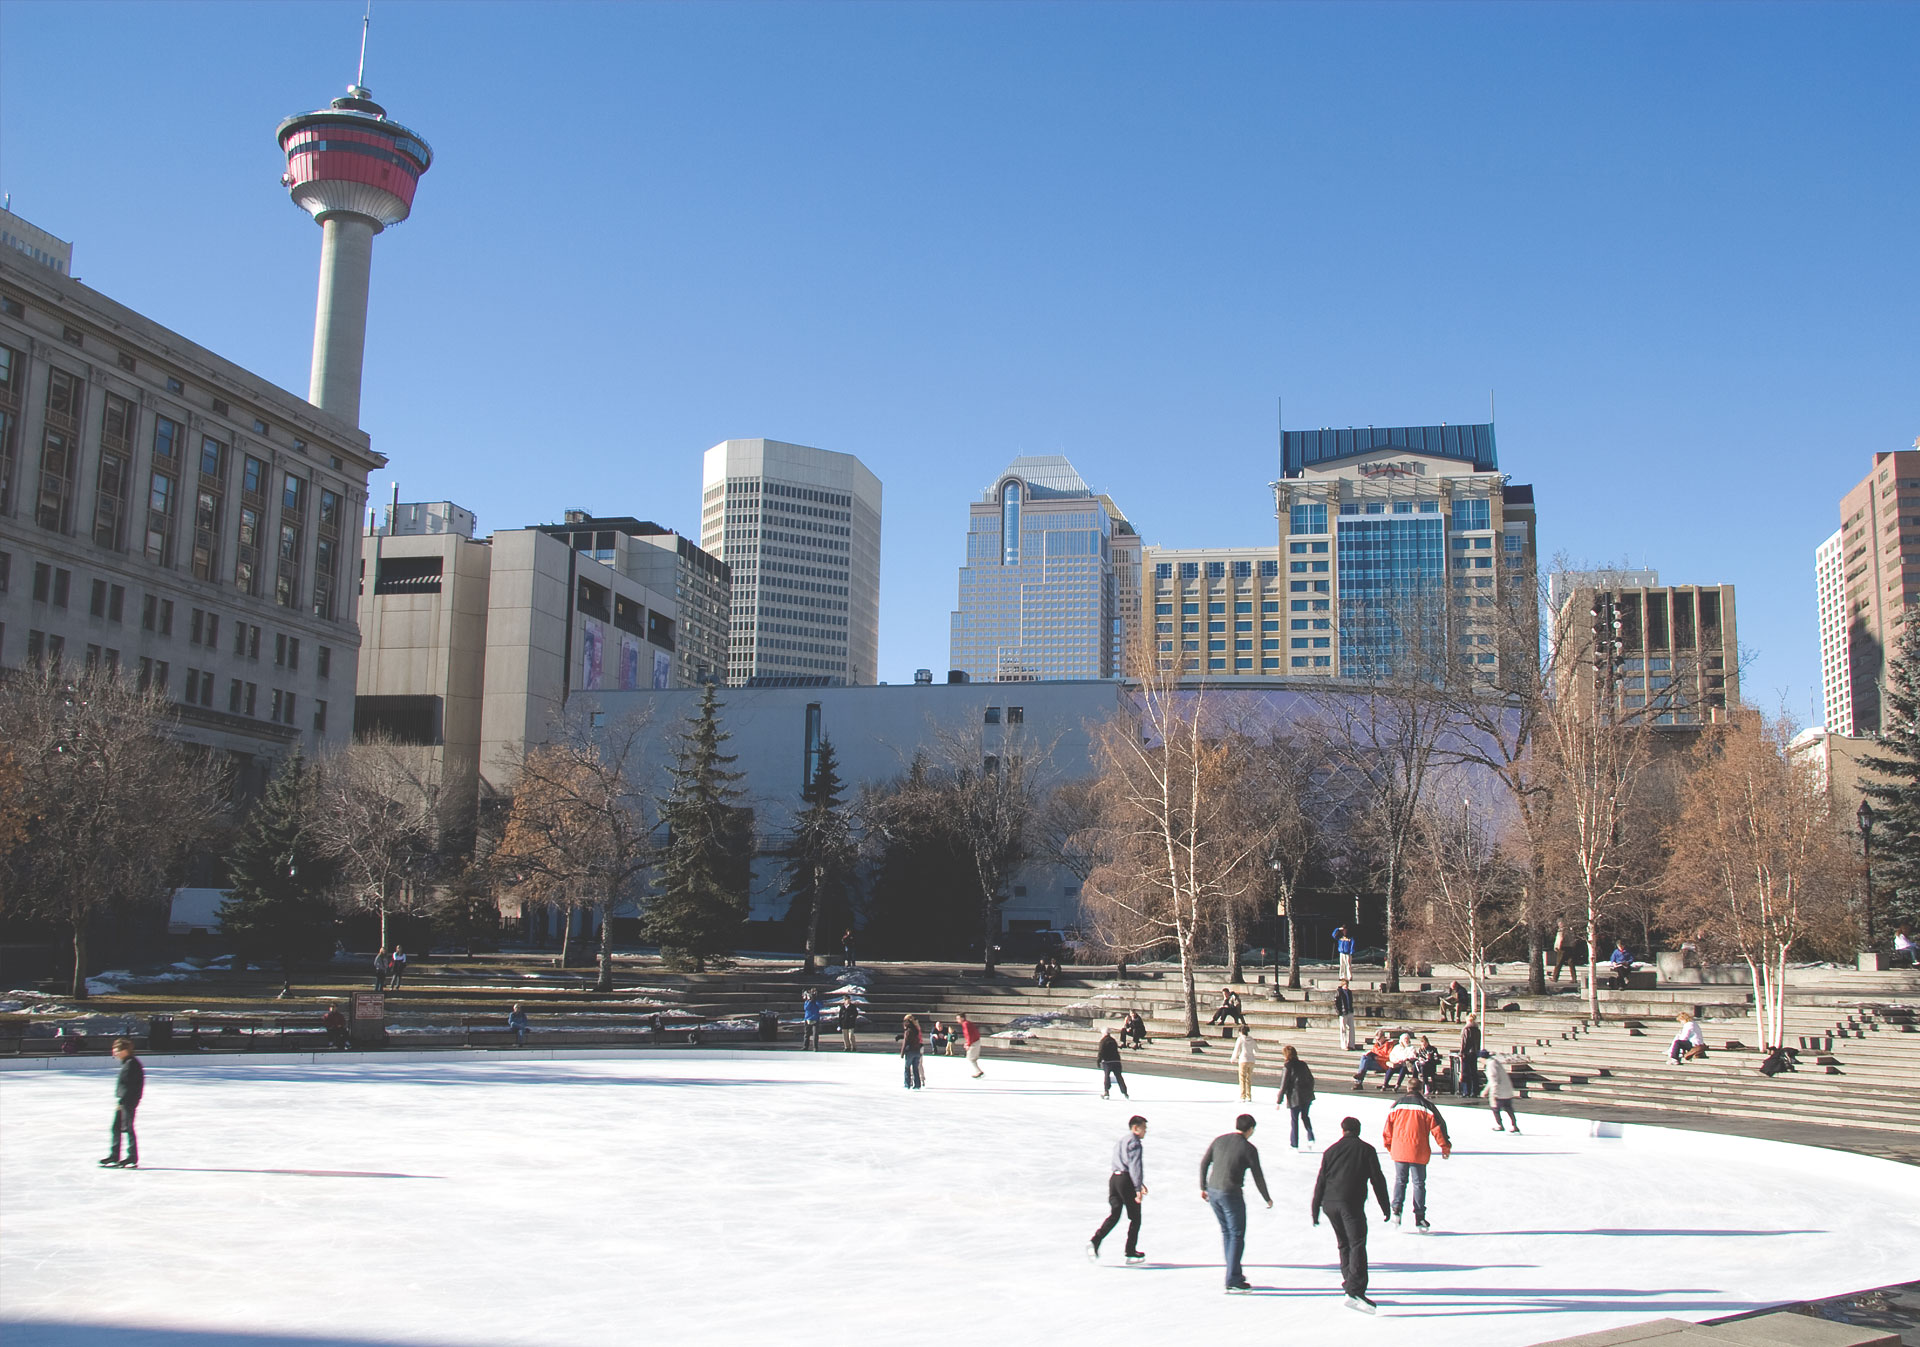 Ice skating at Olympic Plaza in Calgary.